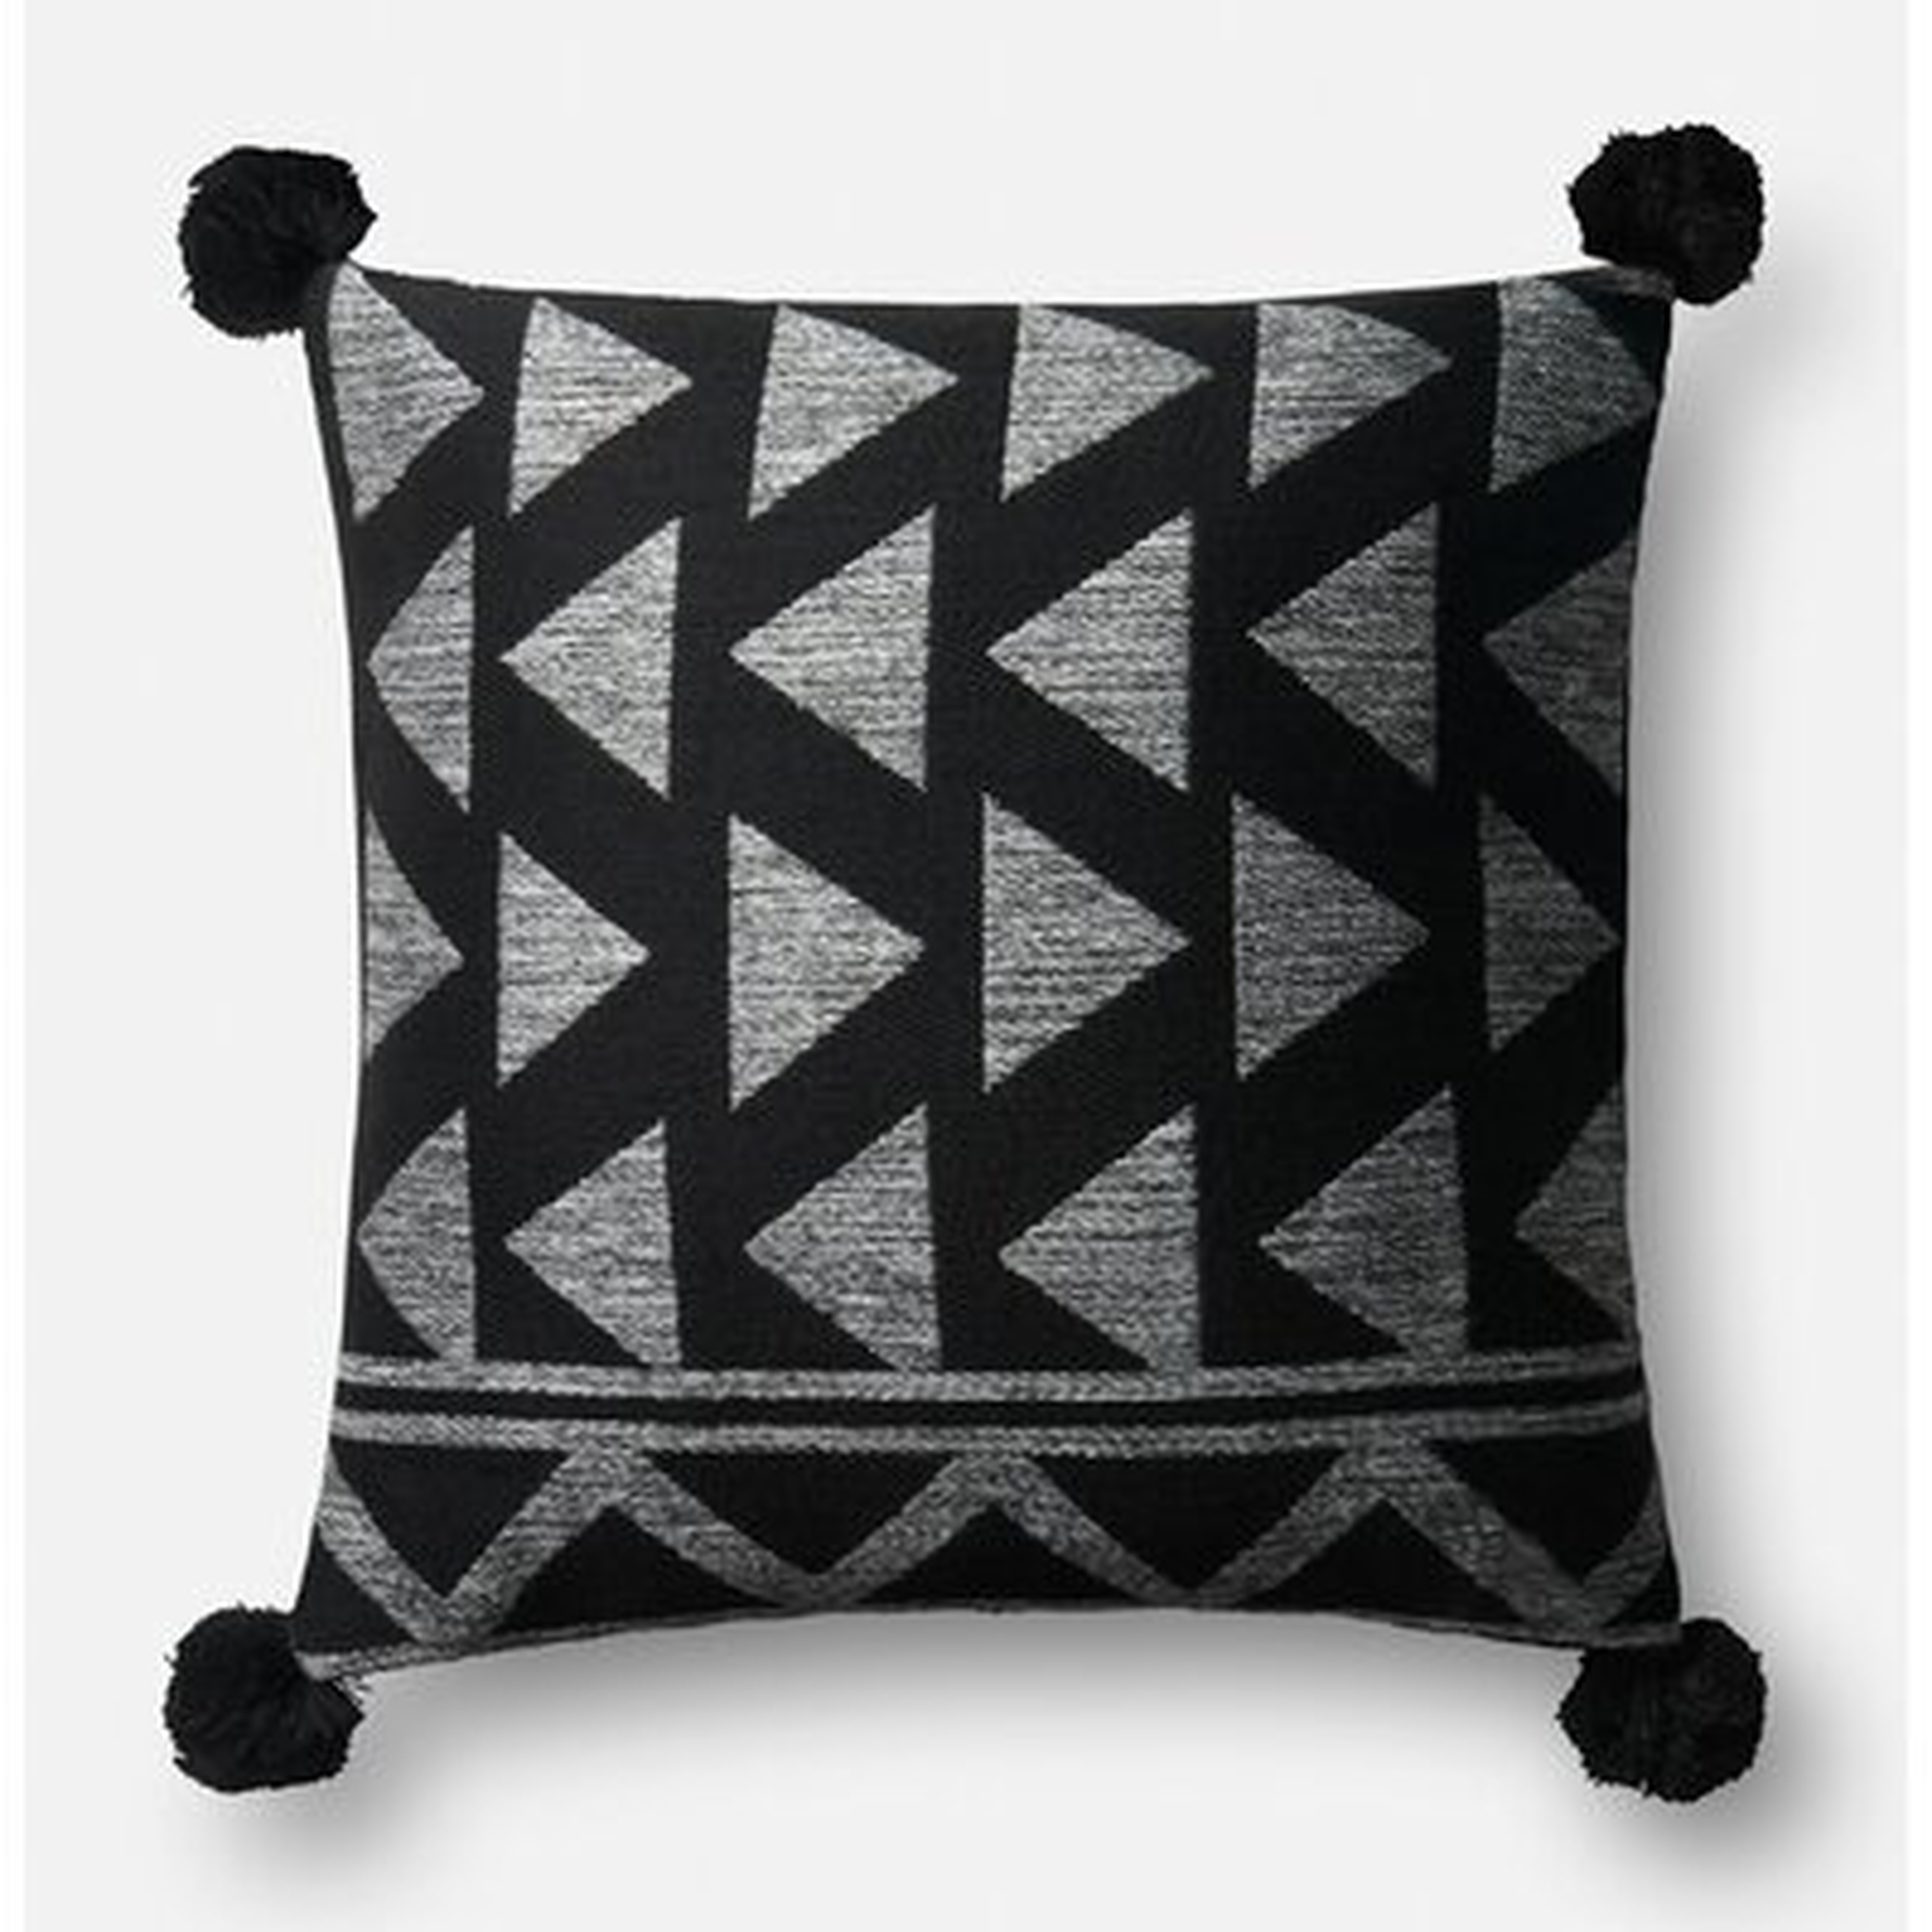 Latrobe Square Outdoor Pillow Cover, 18" x 18" - Wayfair